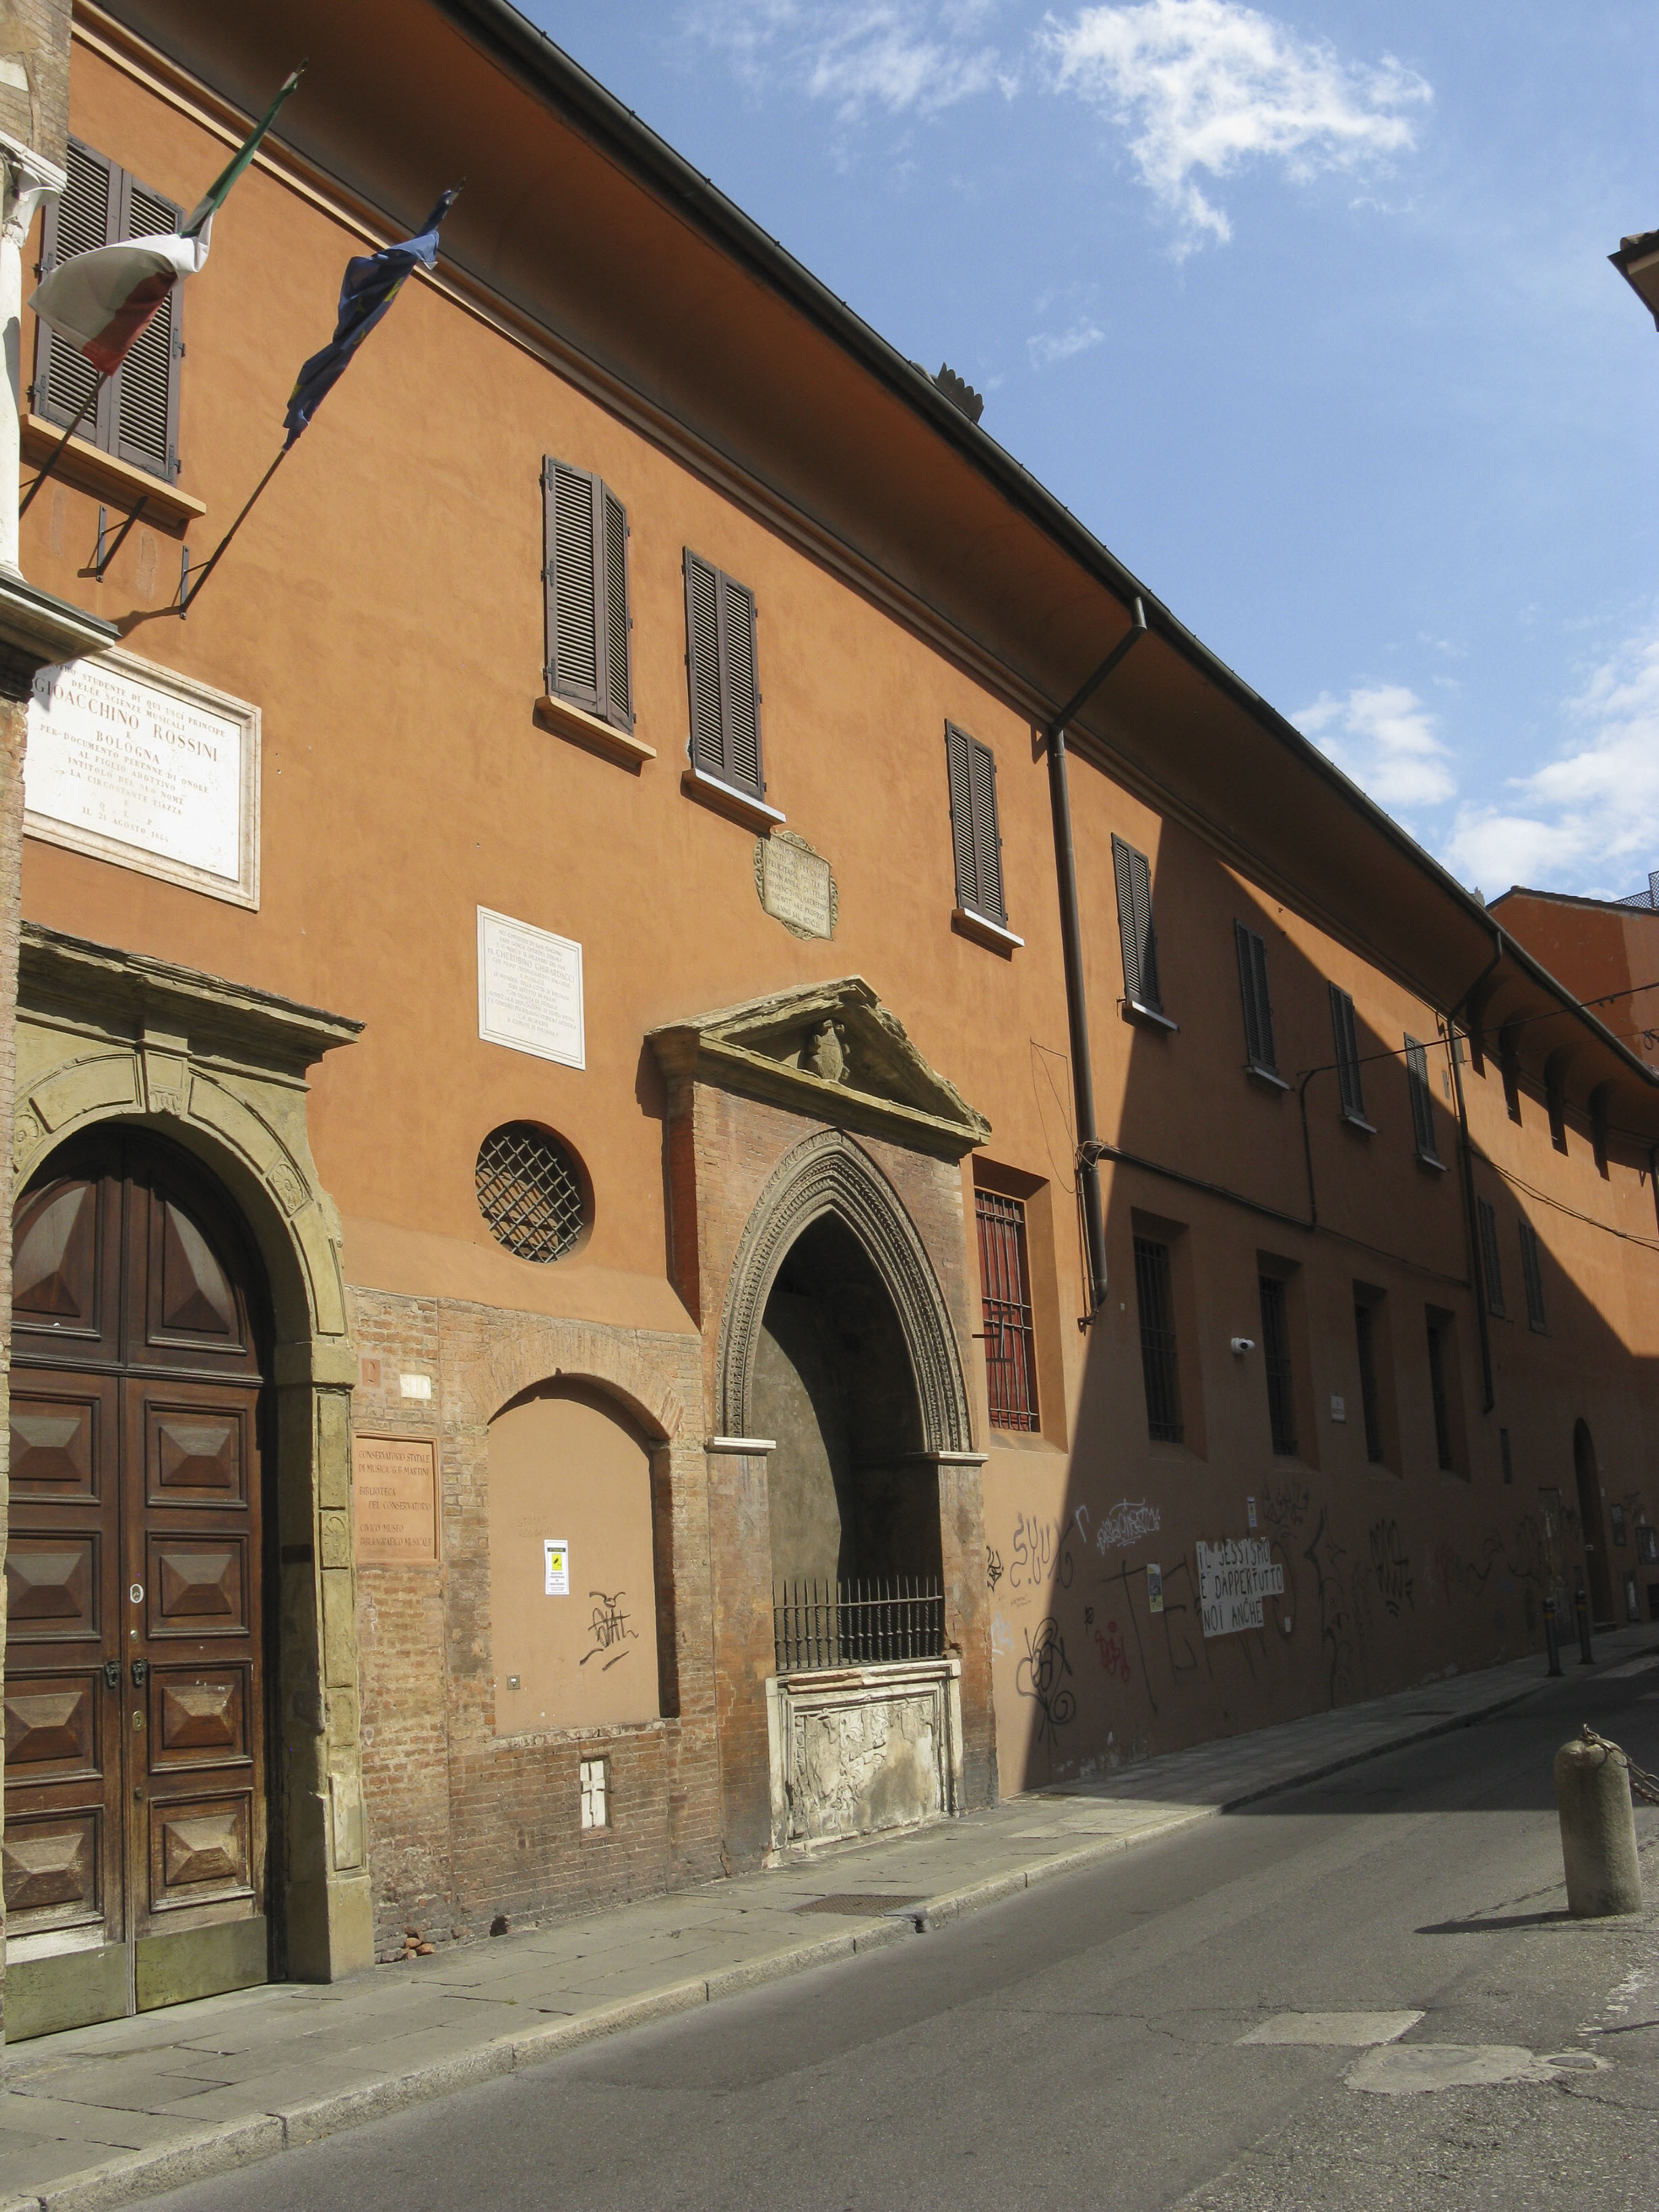 Convento di San Giacomo Maggiore (ex) (convento, agostiniano) - Bologna (BO) 